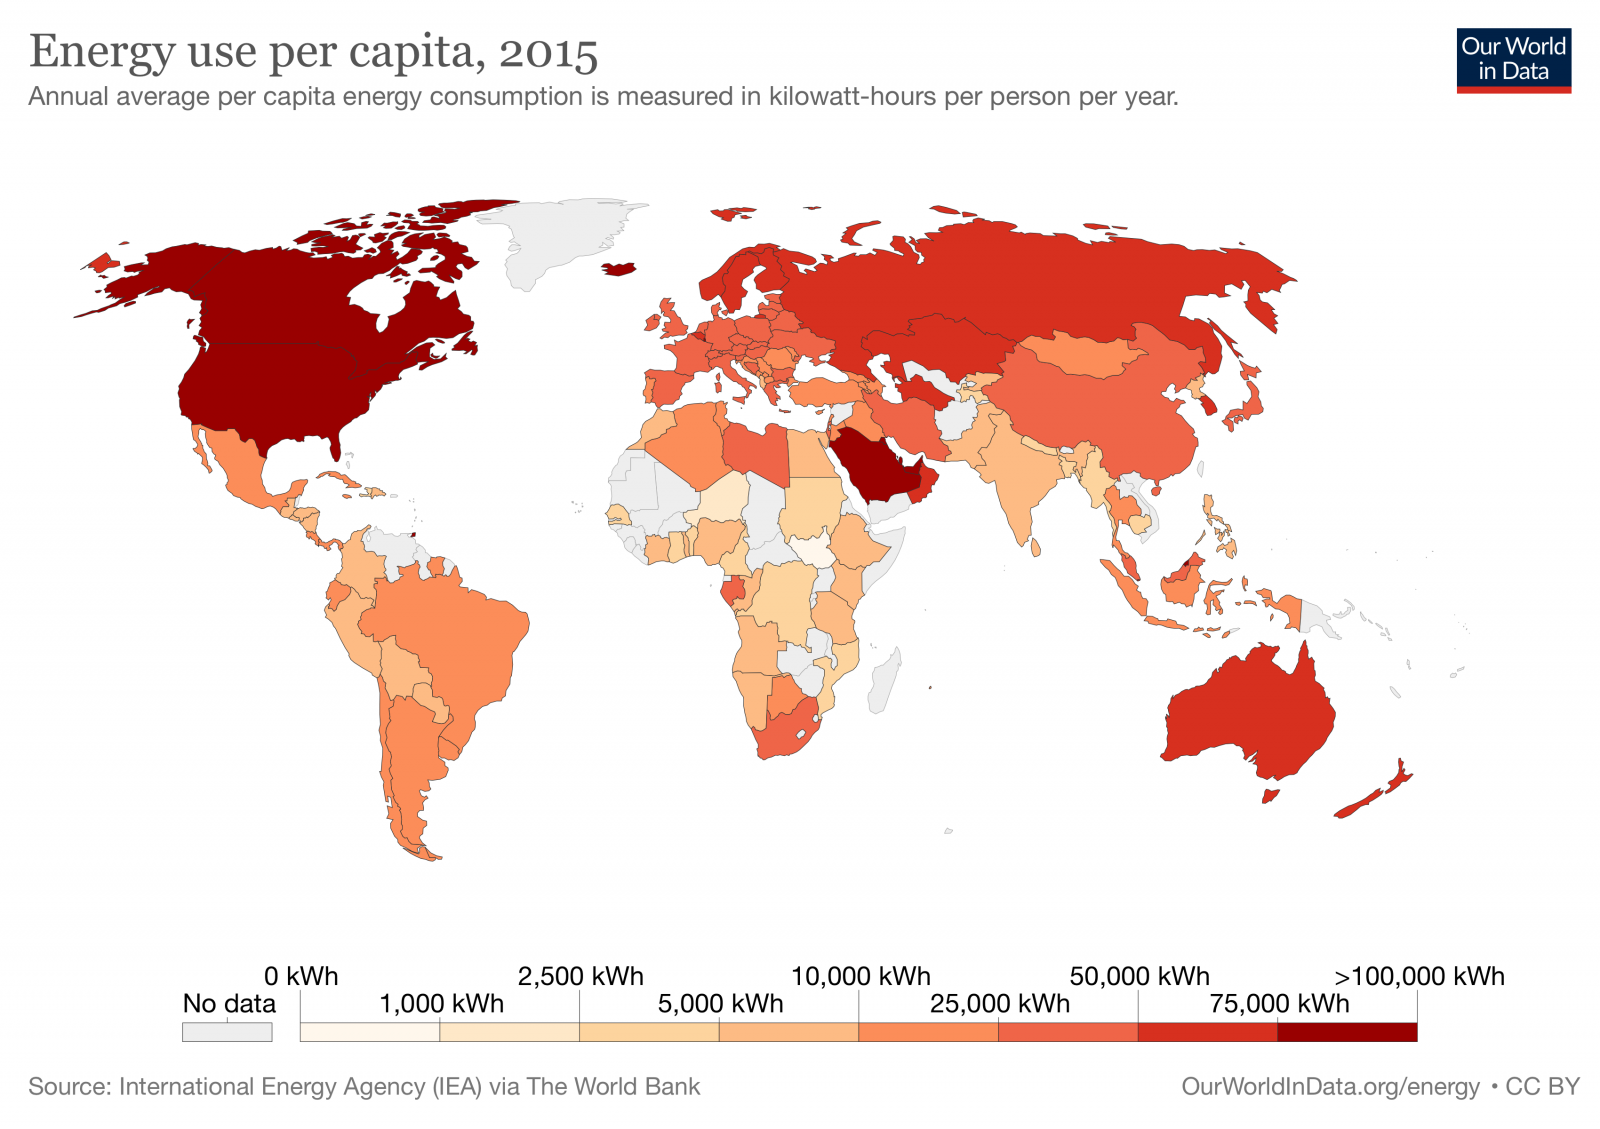 Global energy use per capita, 2015